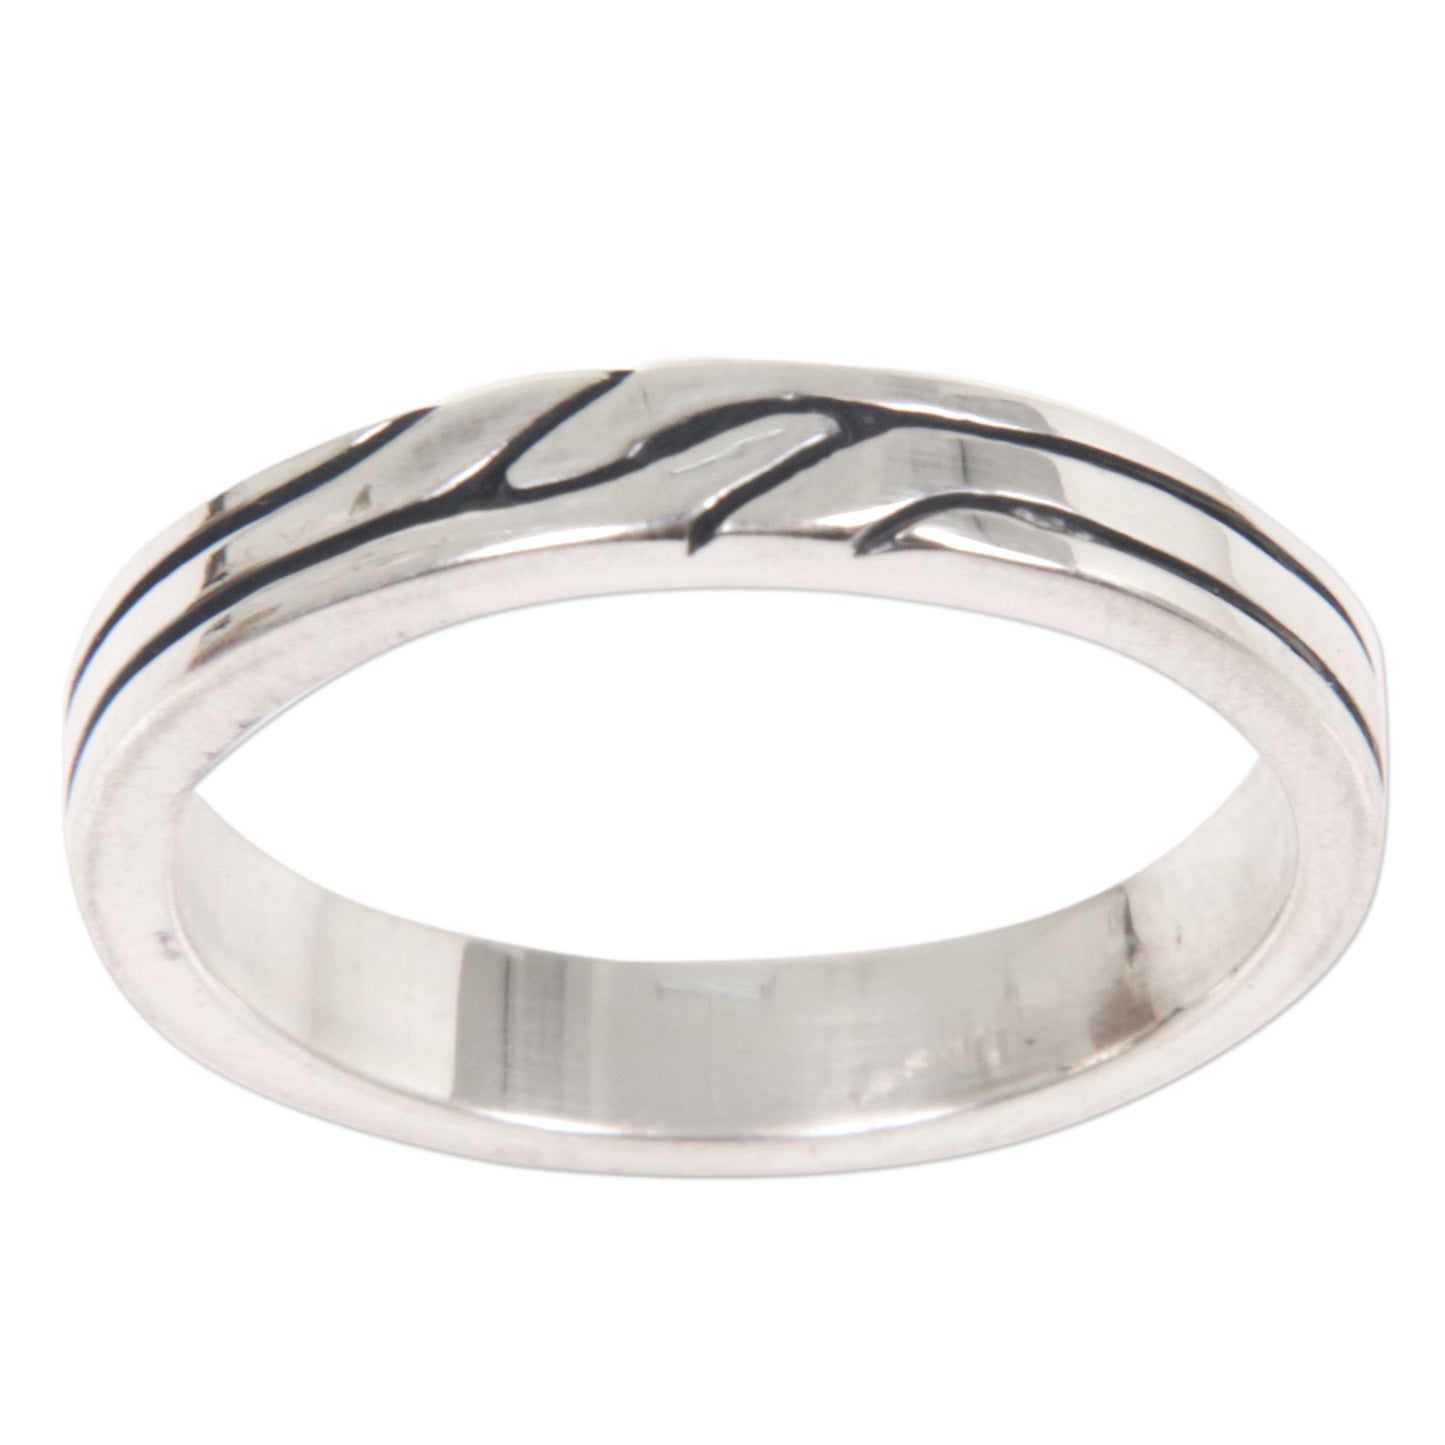 Shiny Minimalist Sterling Silver Band Ring with Balinese Minimalist Styling